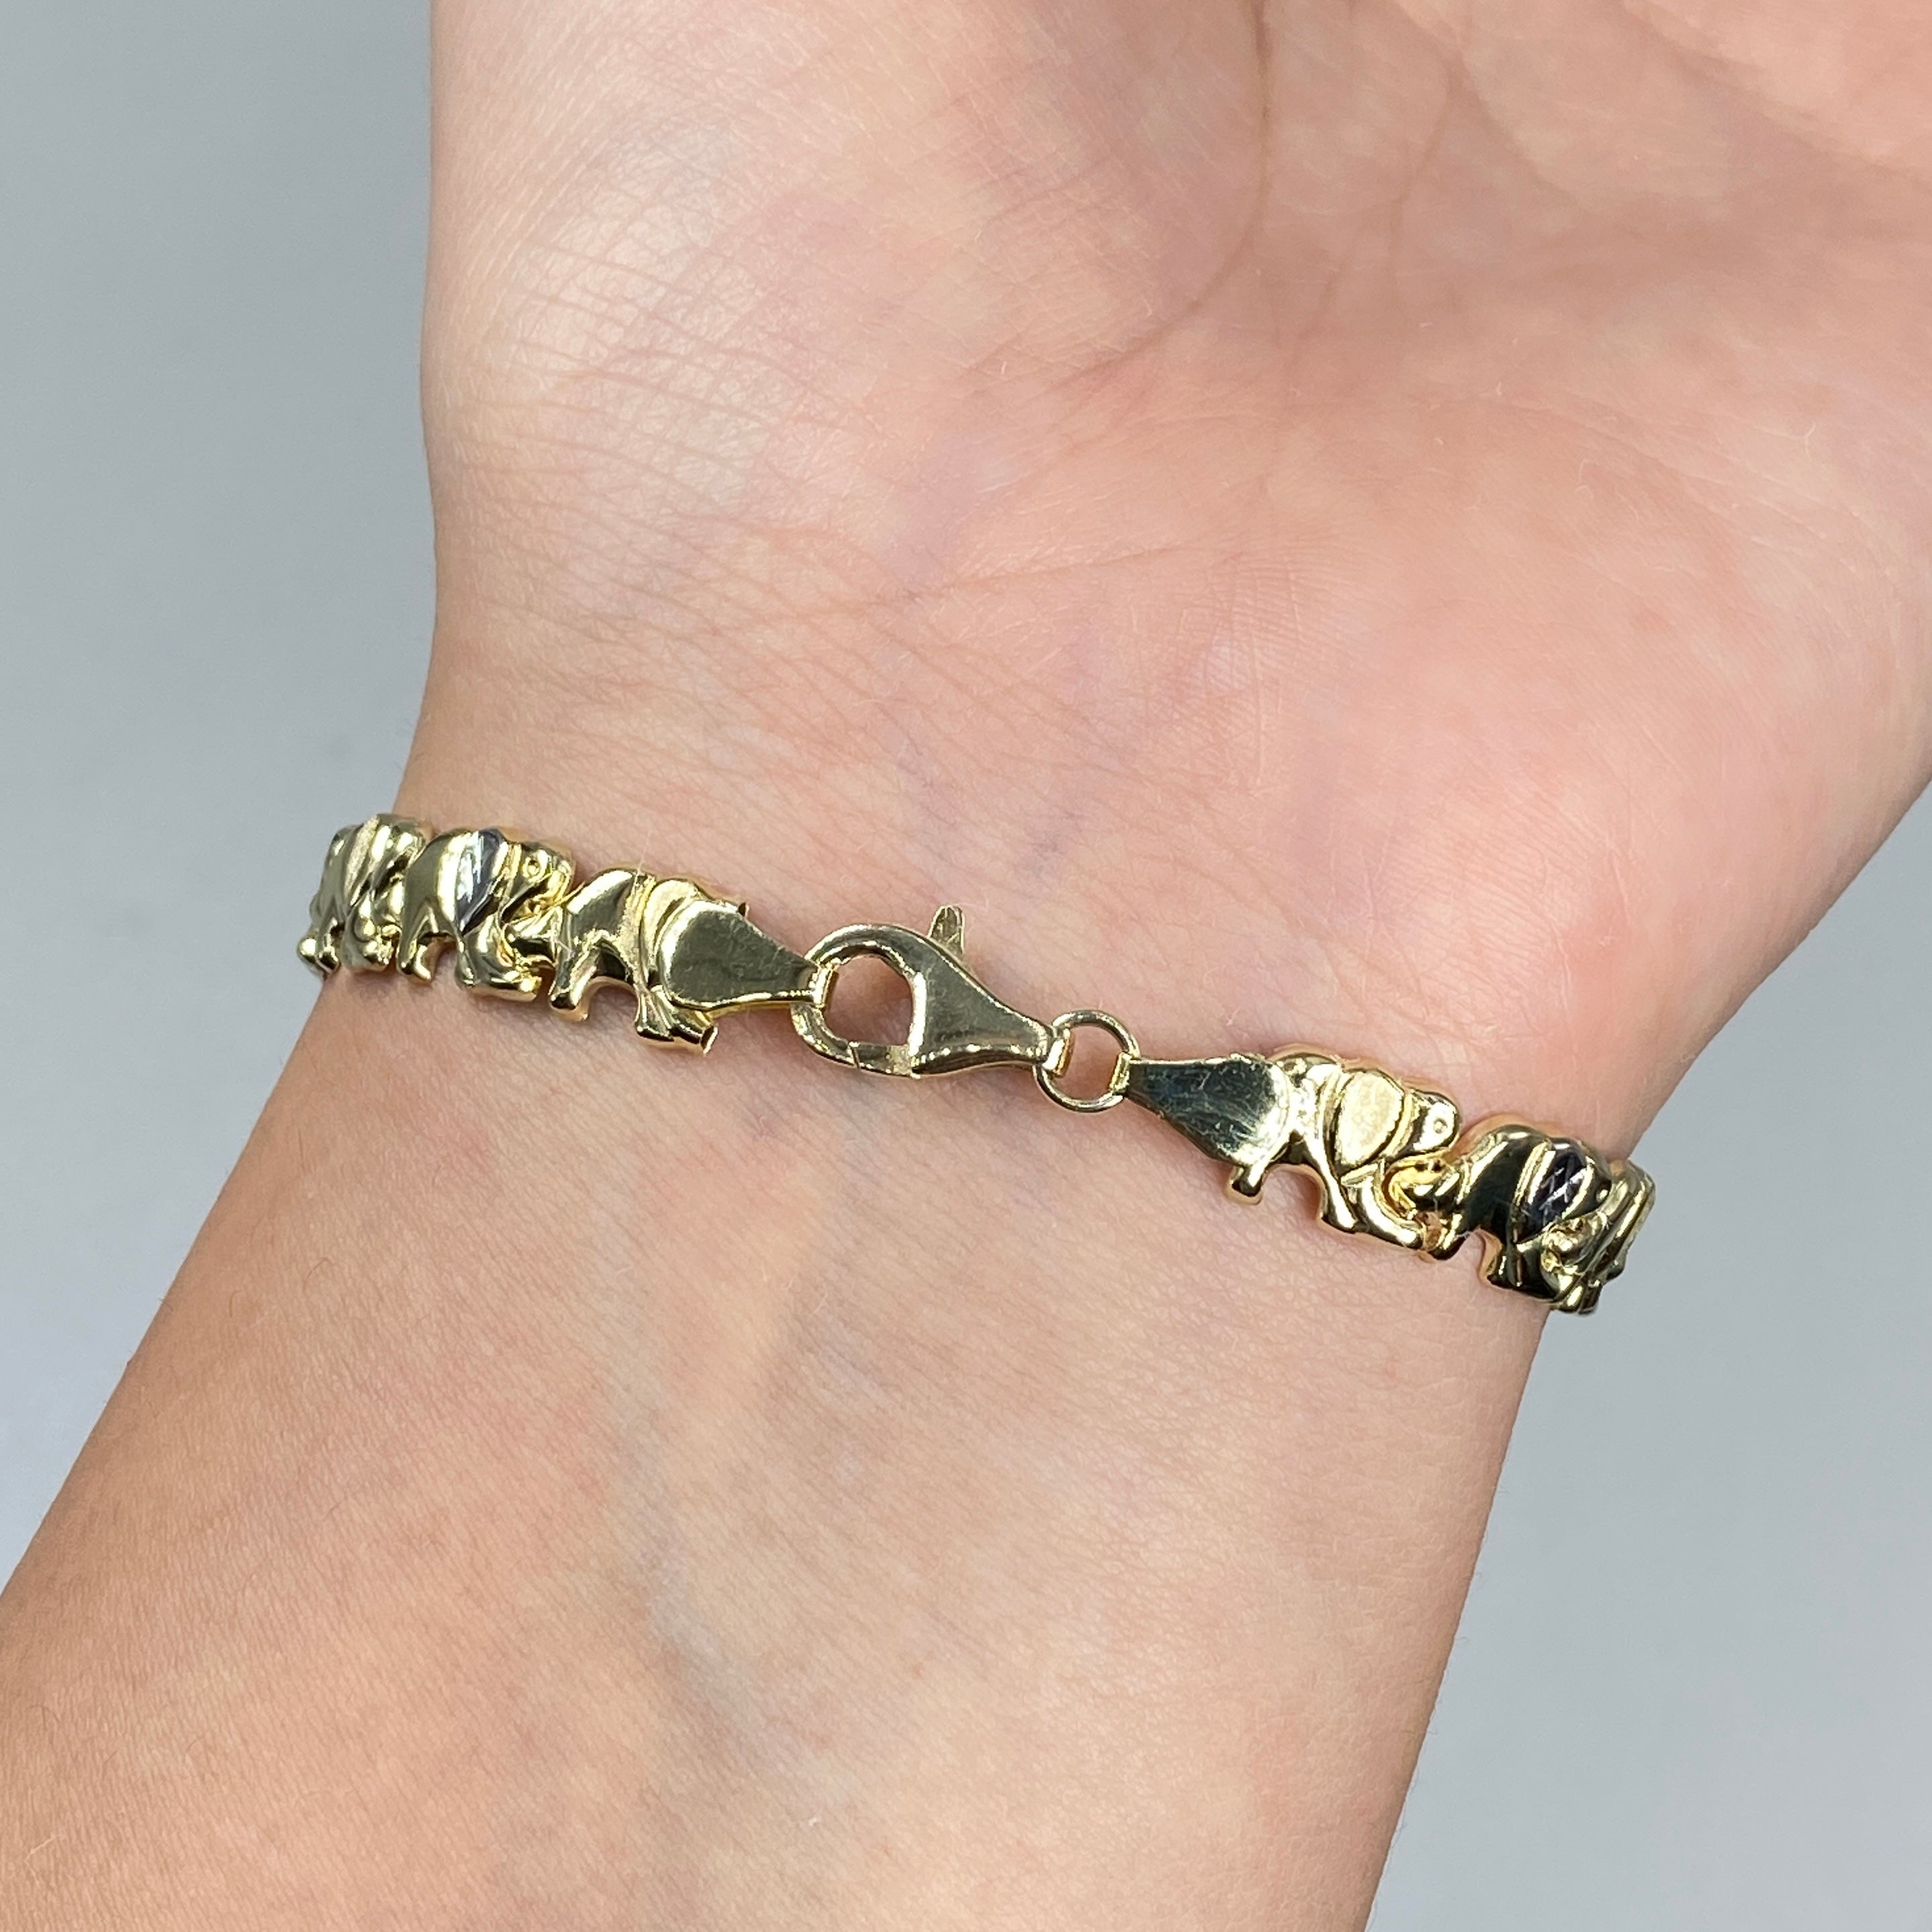 Bracelet of 14K gold - elephant with glittery zircons, fine glossy chain |  Jewellery Eshop UK